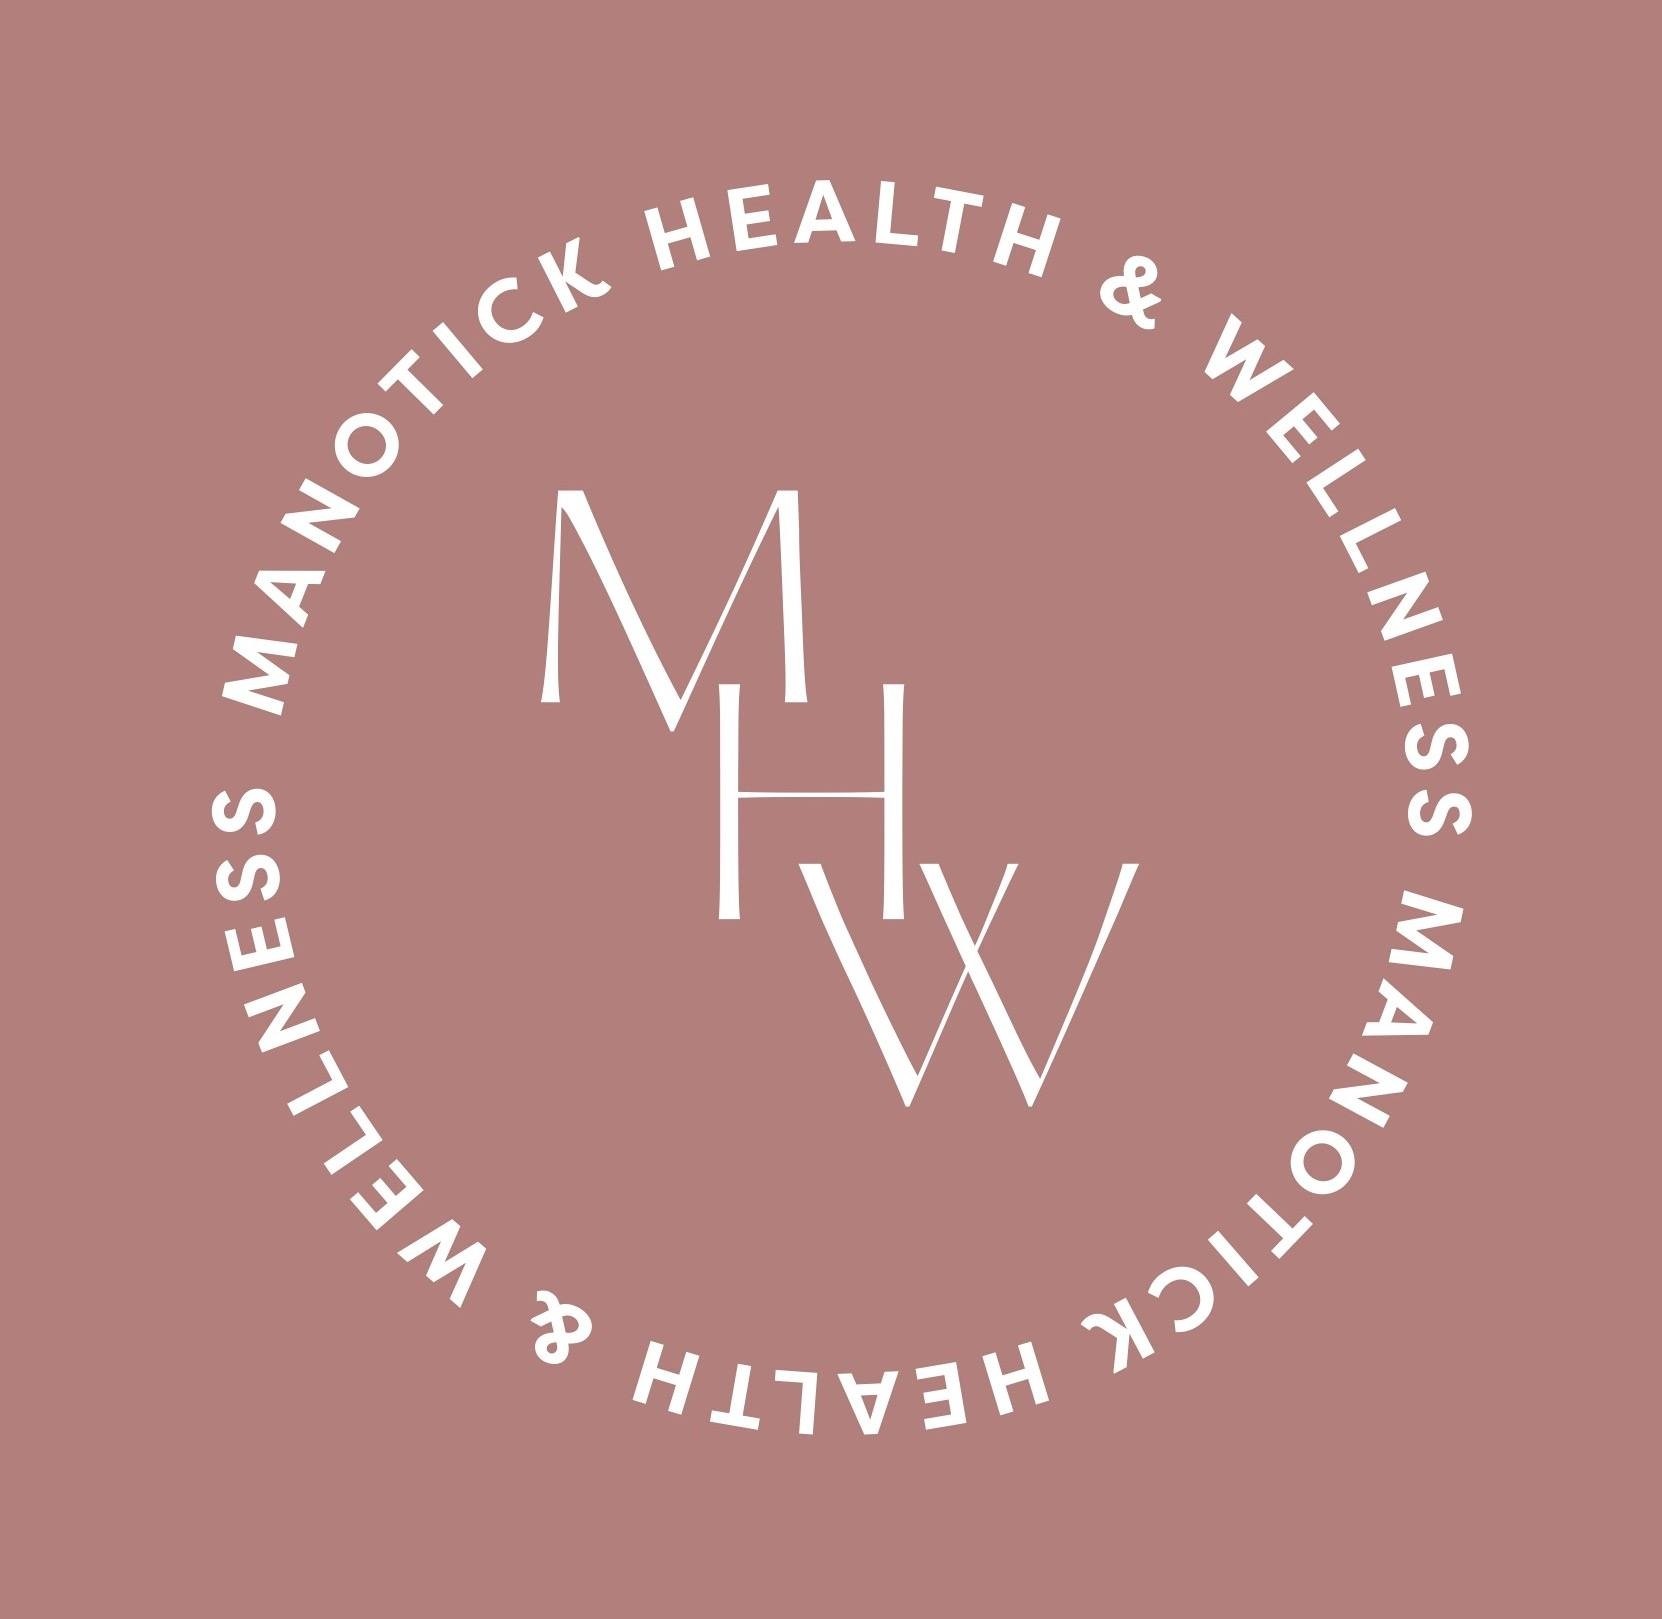 Manotick Health & Wellness logo - Business in Manotick